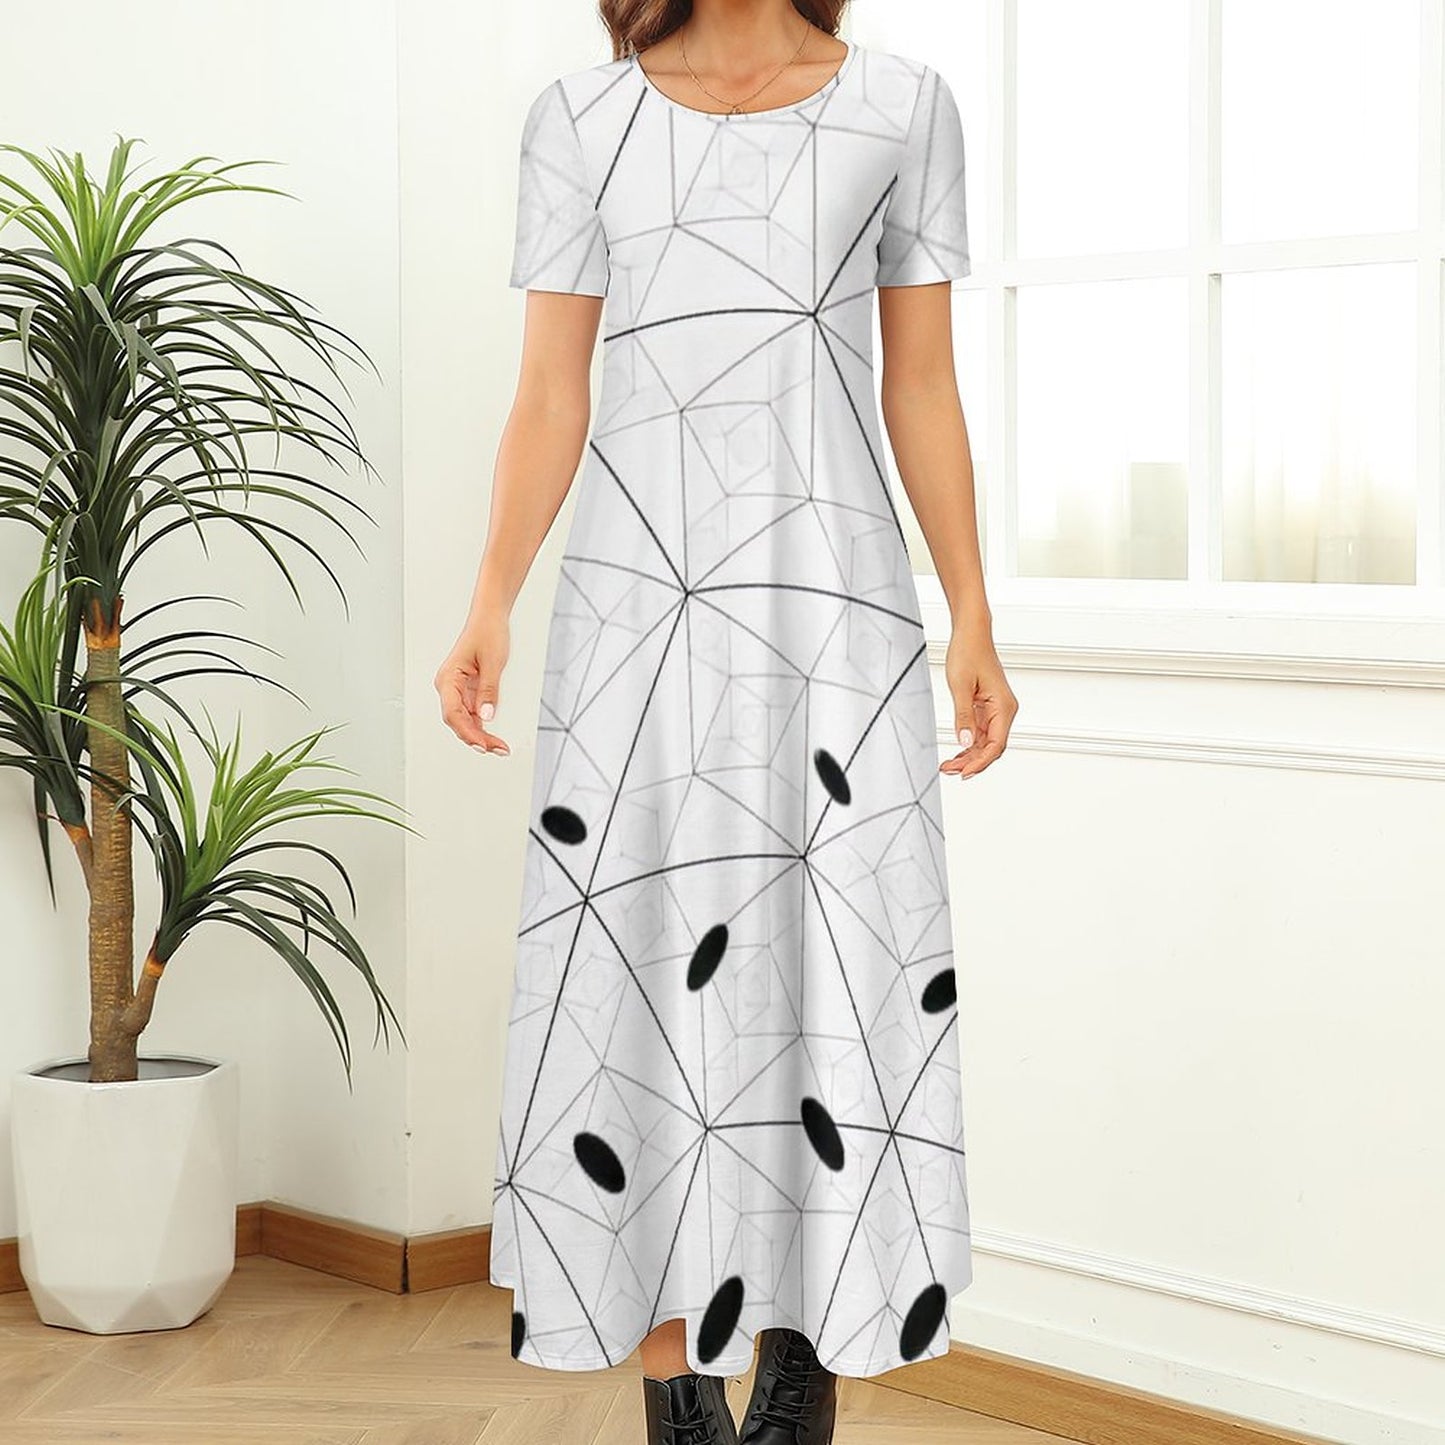 Online DIY Dress for Women Round Neck Short Sleeve Dress